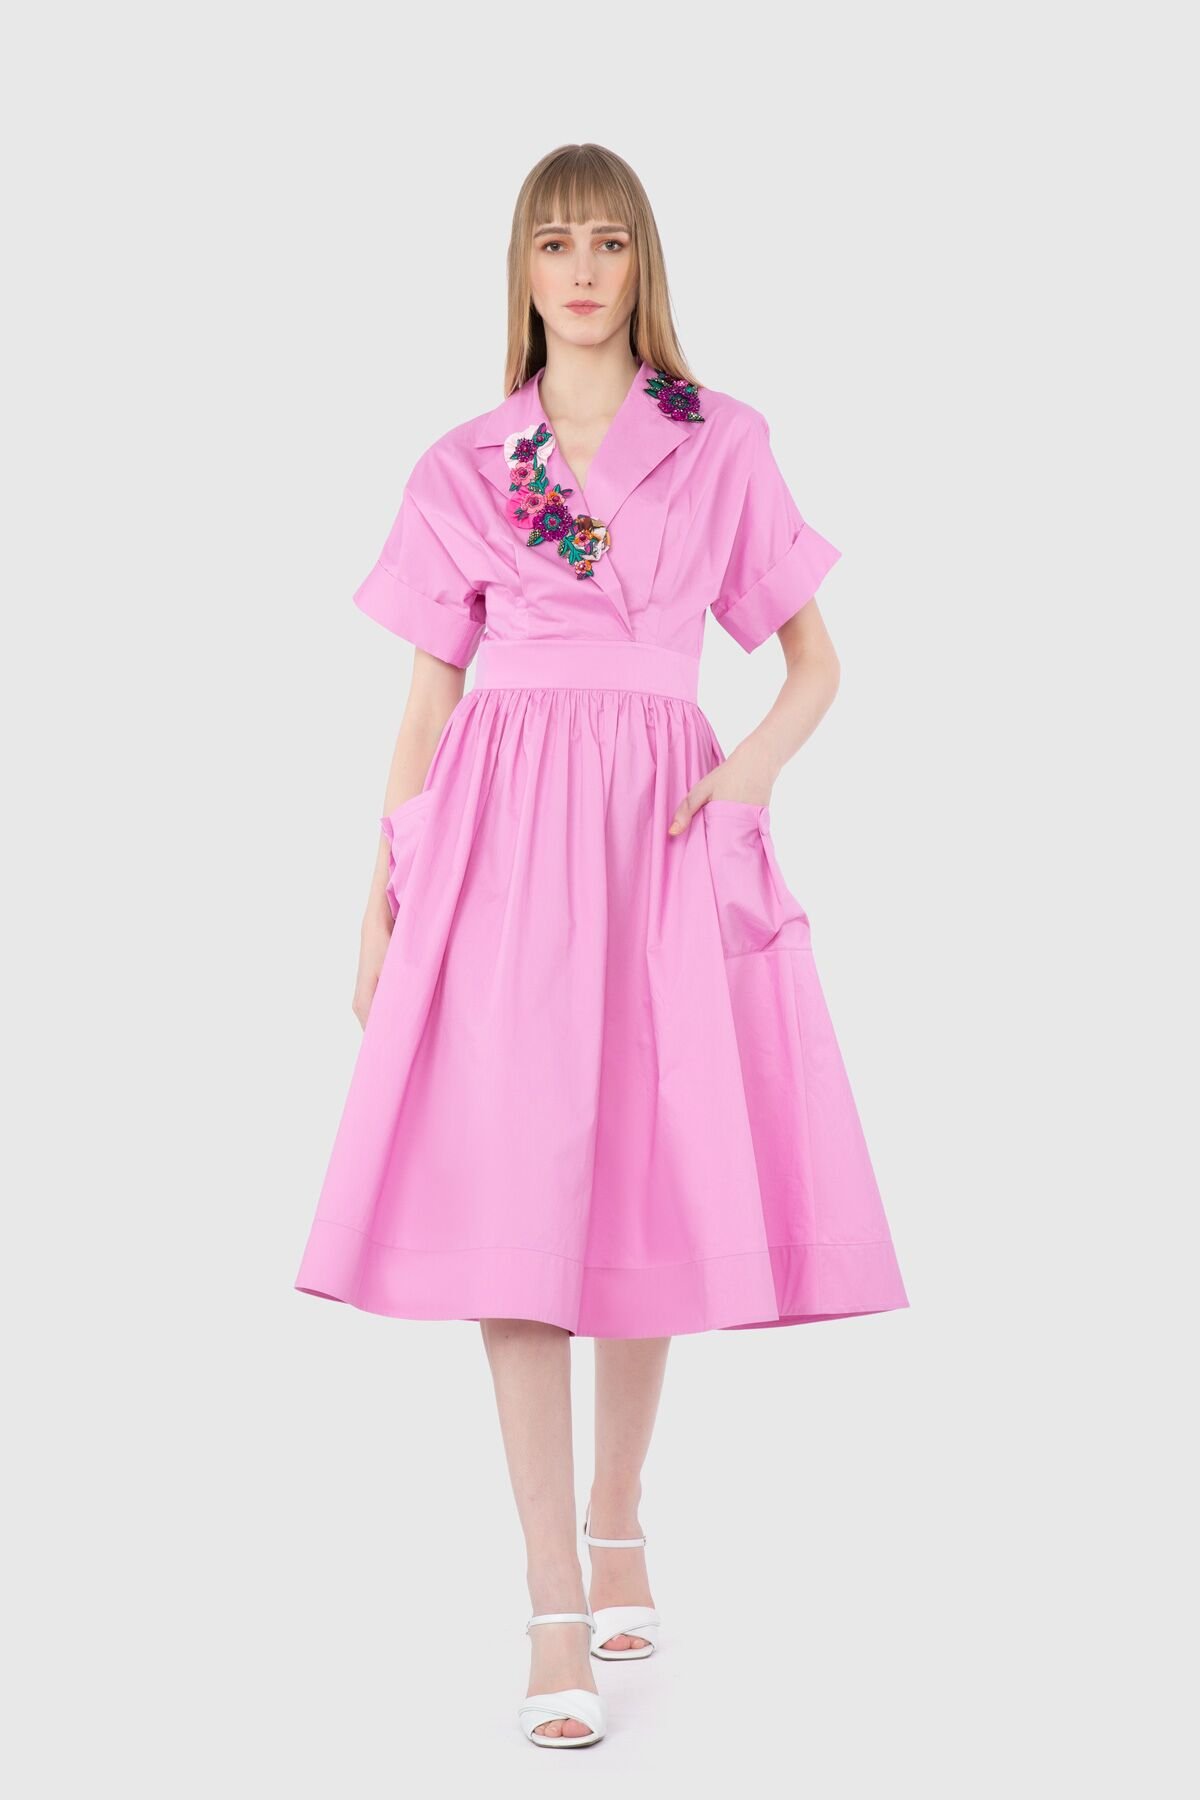 Floral Embroidered Collar Detailed Flywheel Skirt Pink Dress